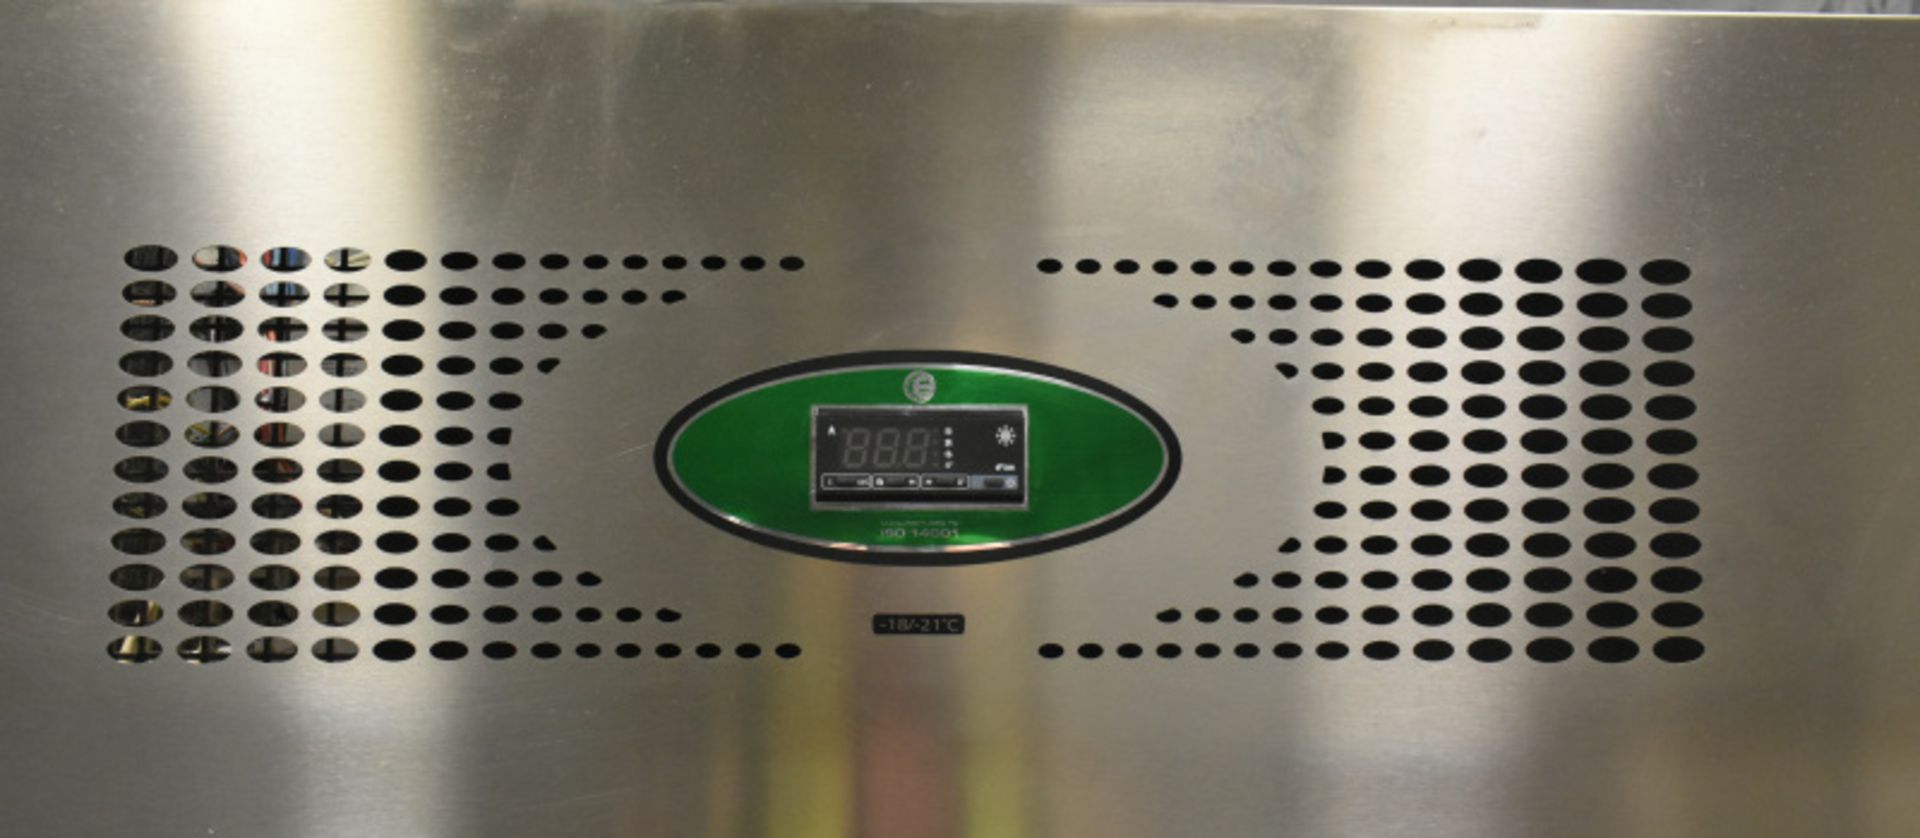 Foster Double Door Freezer - Model EPSG1350L Serial No. E5216557 - L1440 x W800 x H2060mm - Image 2 of 9